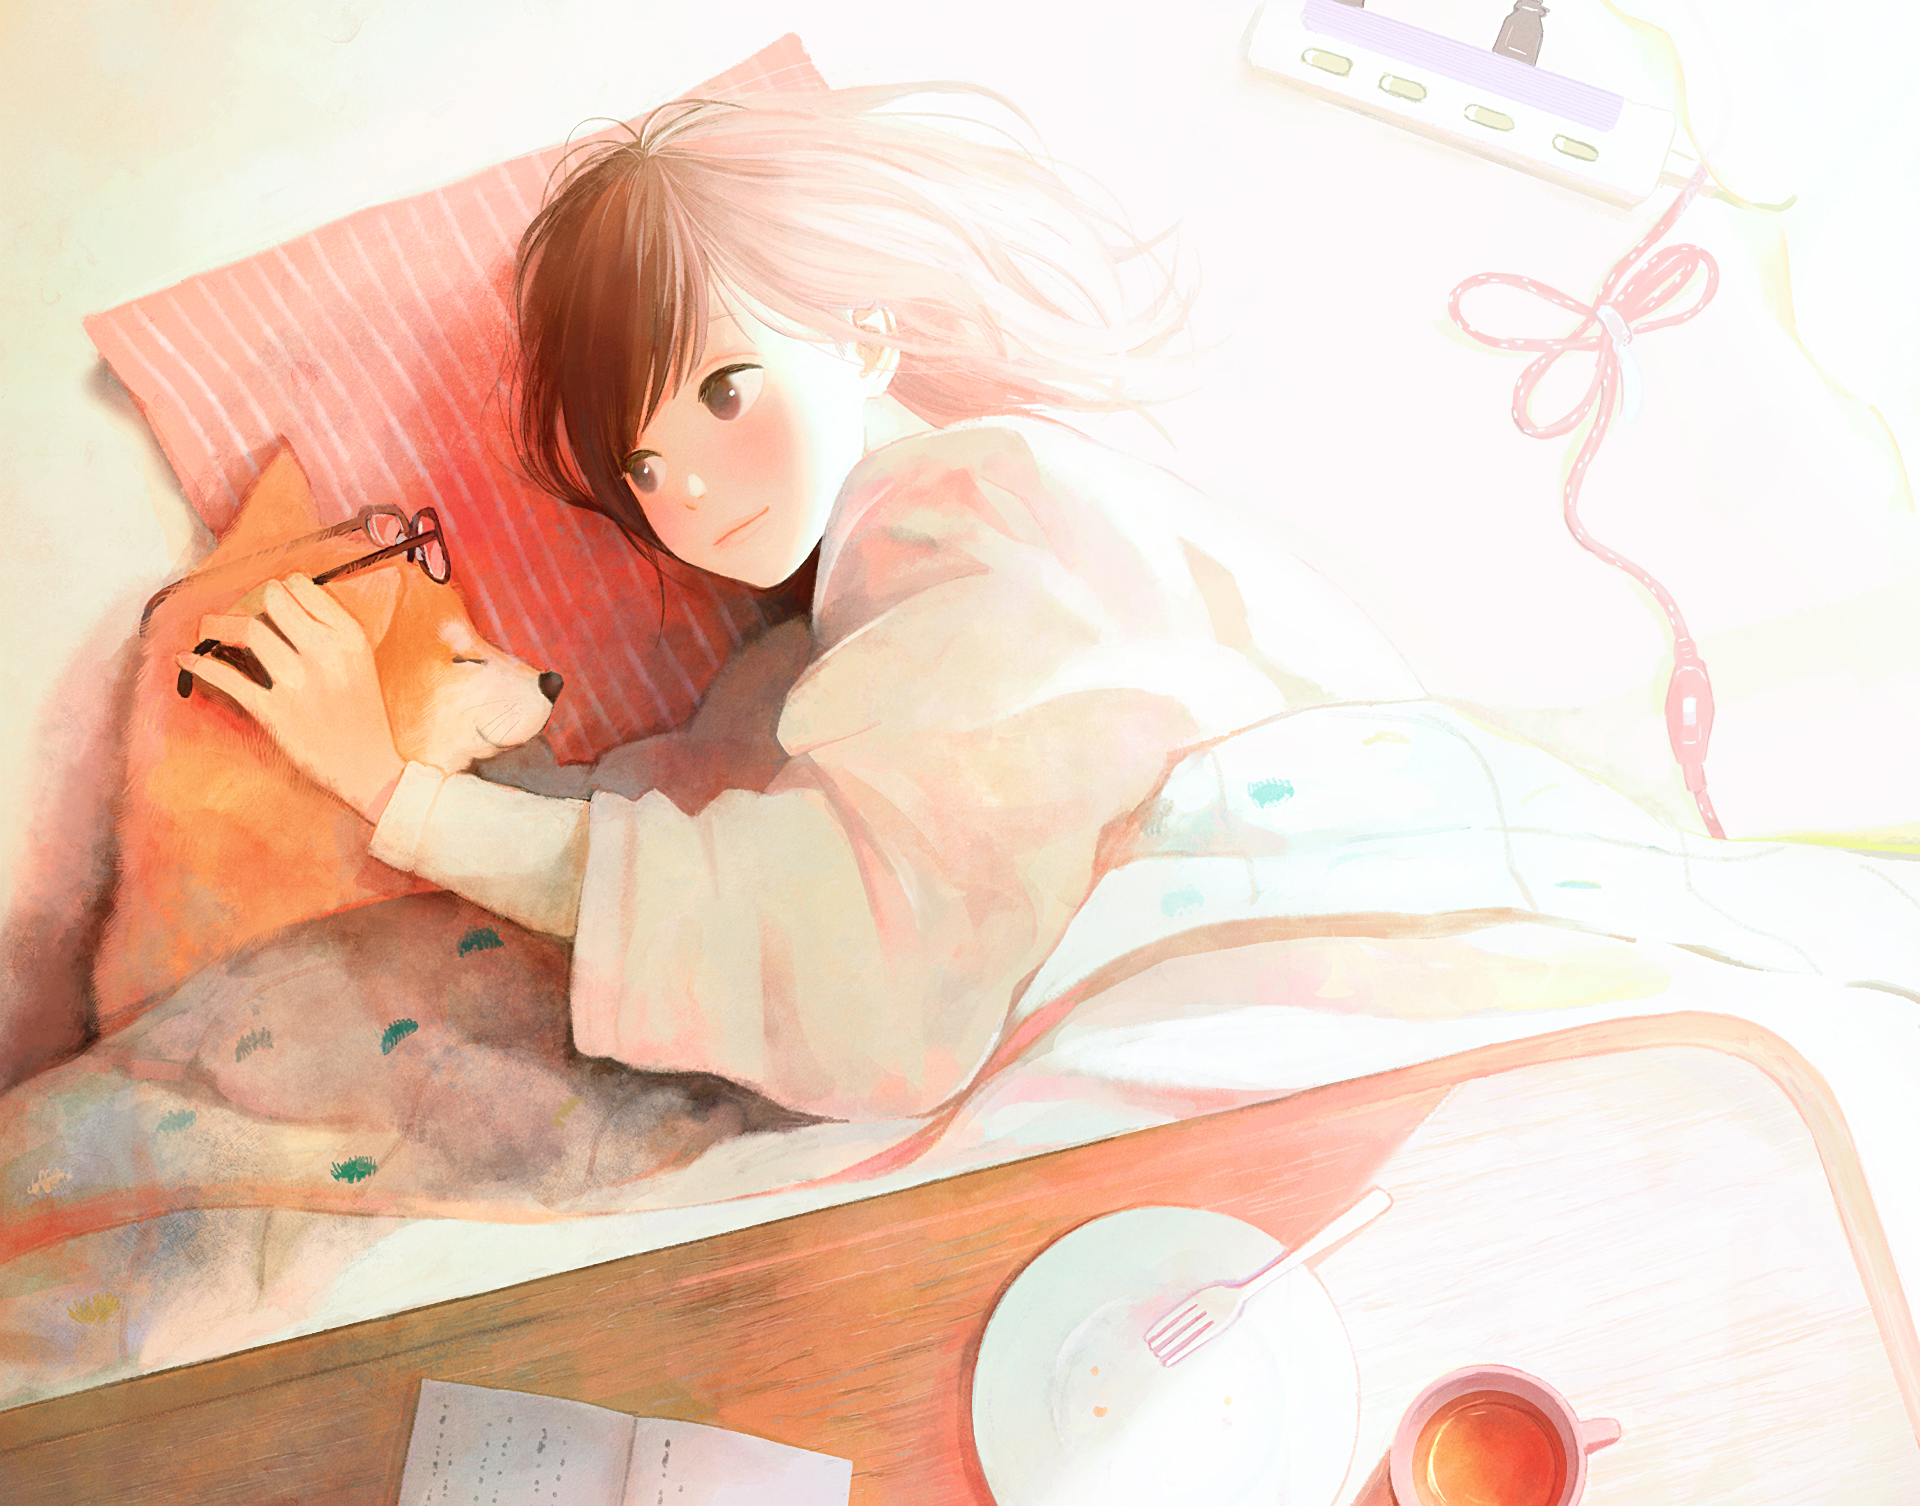 Original Wallpaper Background Image. #girl #anime If you enjoy. Pls follow me. Thanks <3. Anime art, Anime, Cute art